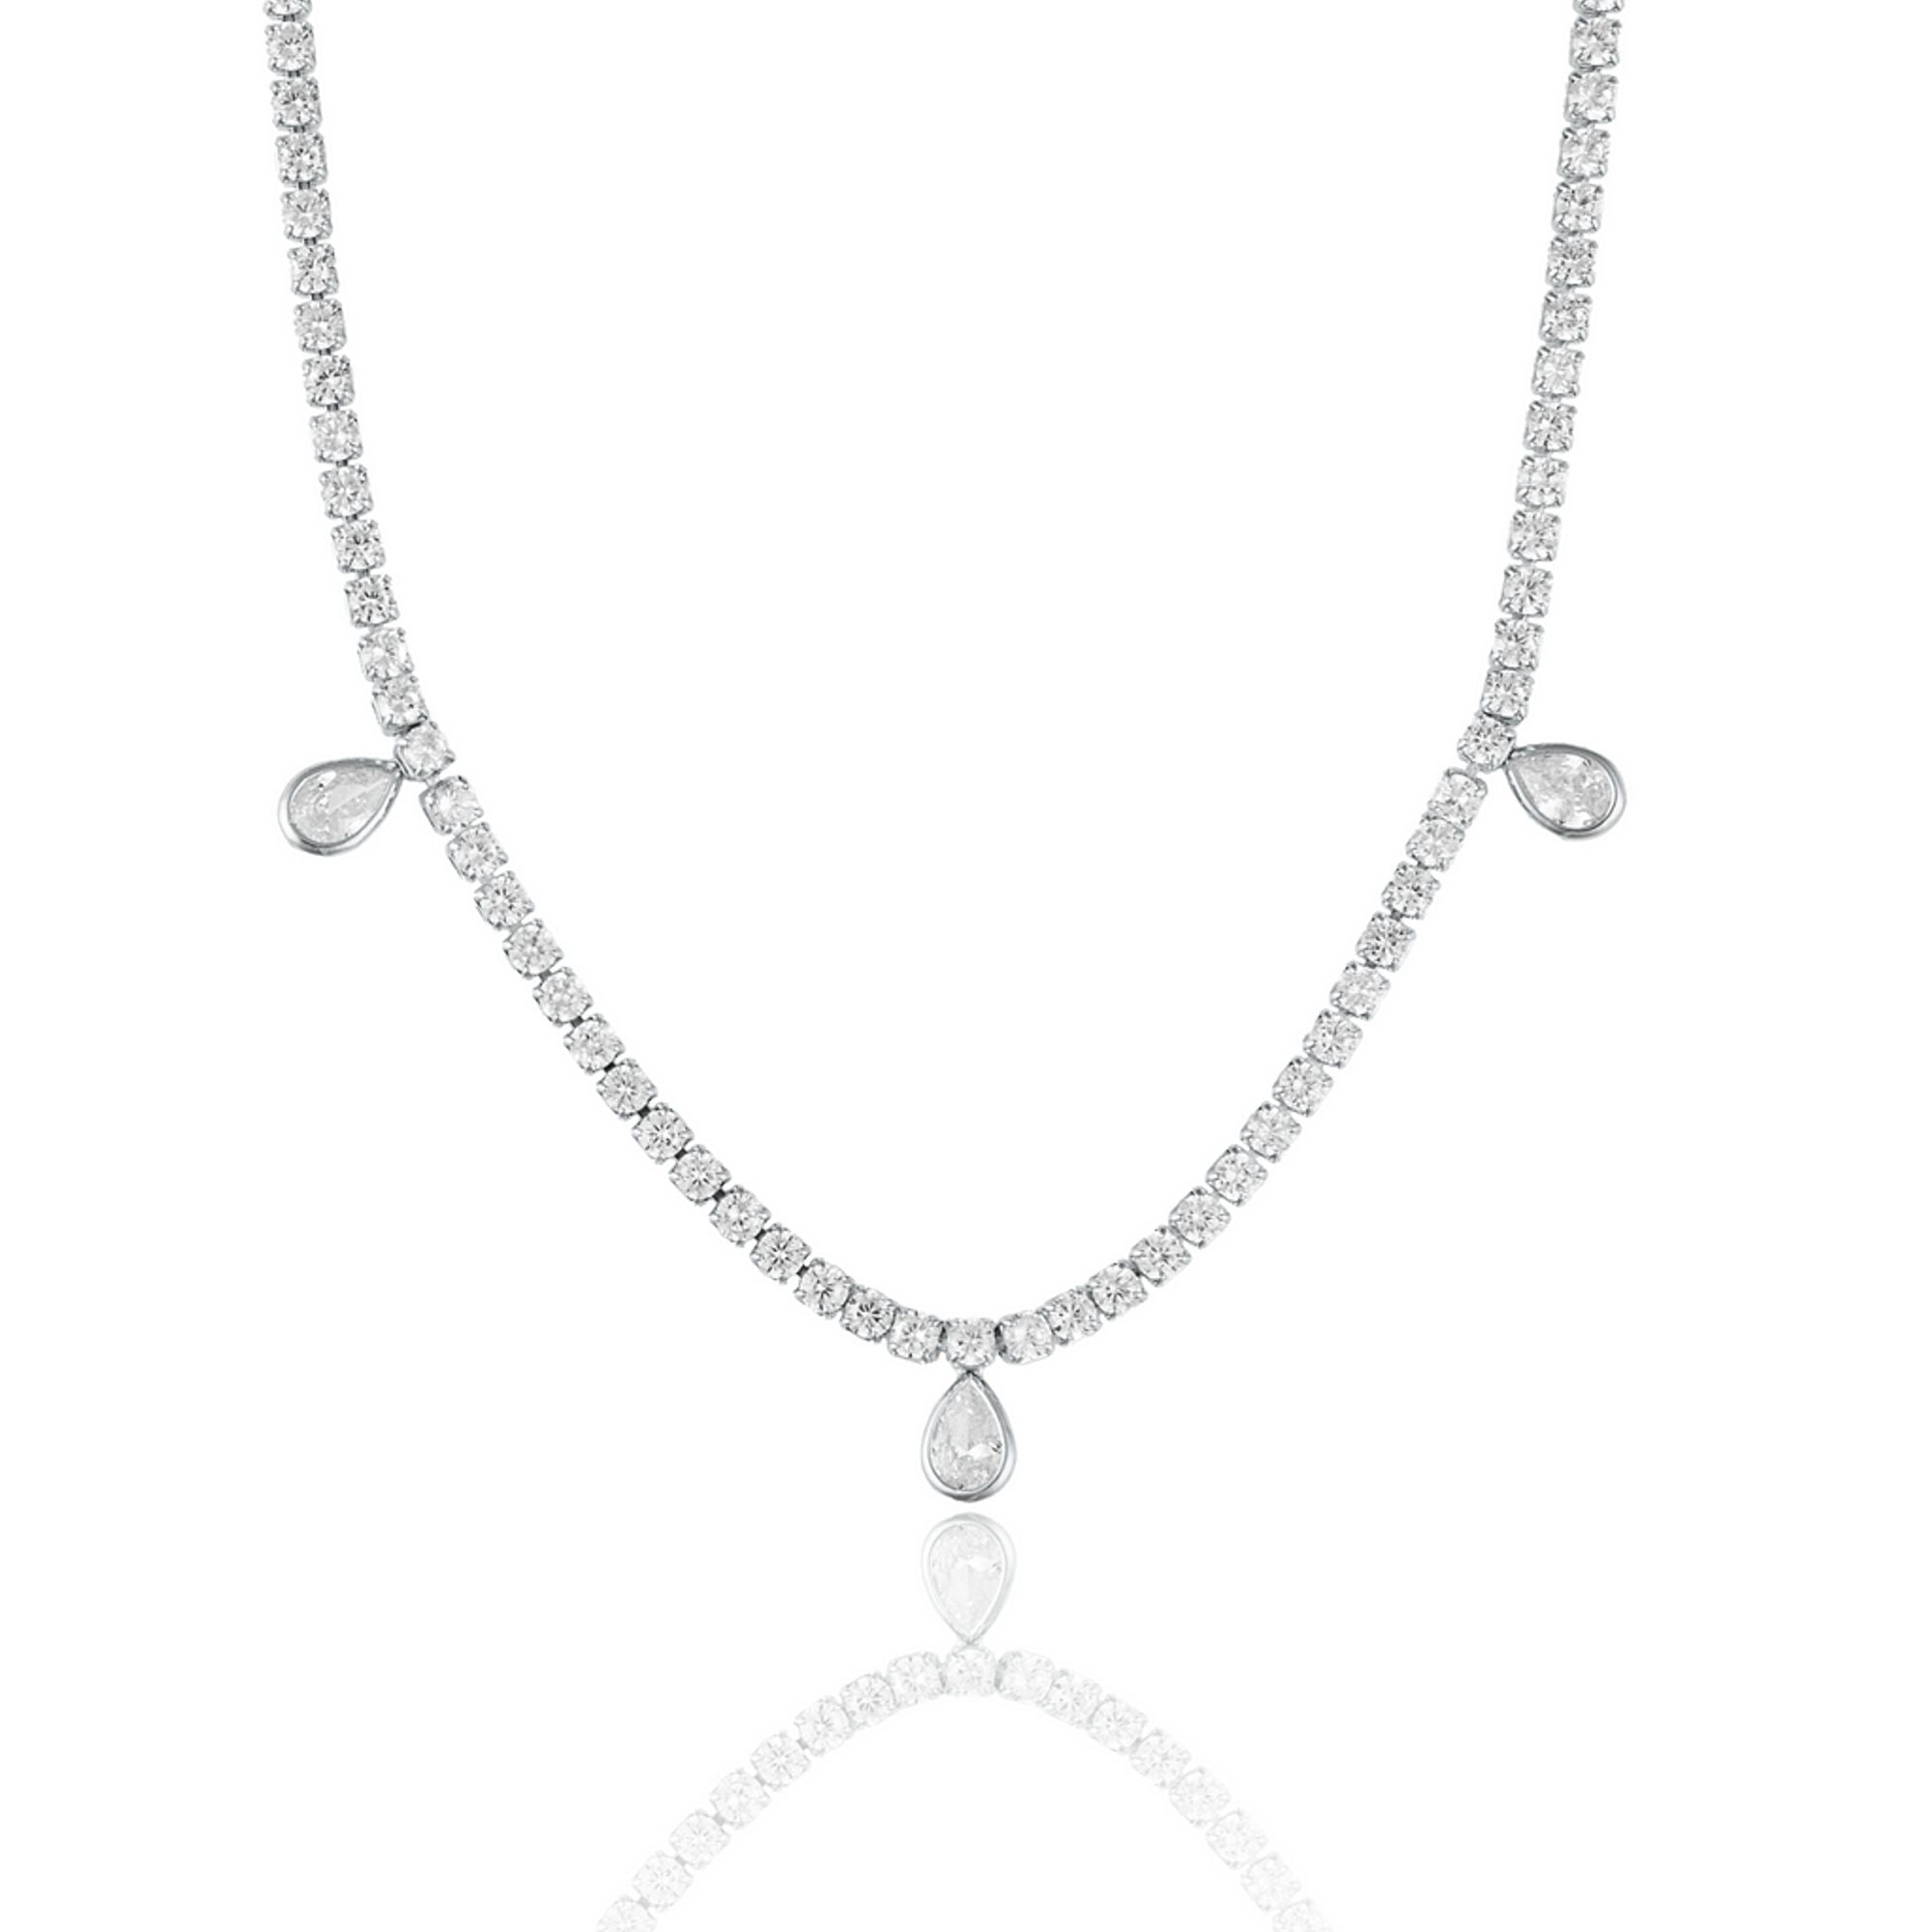 Dainty Tennis Necklace / Bracelet With Tear Drop Cz Stones (G180)